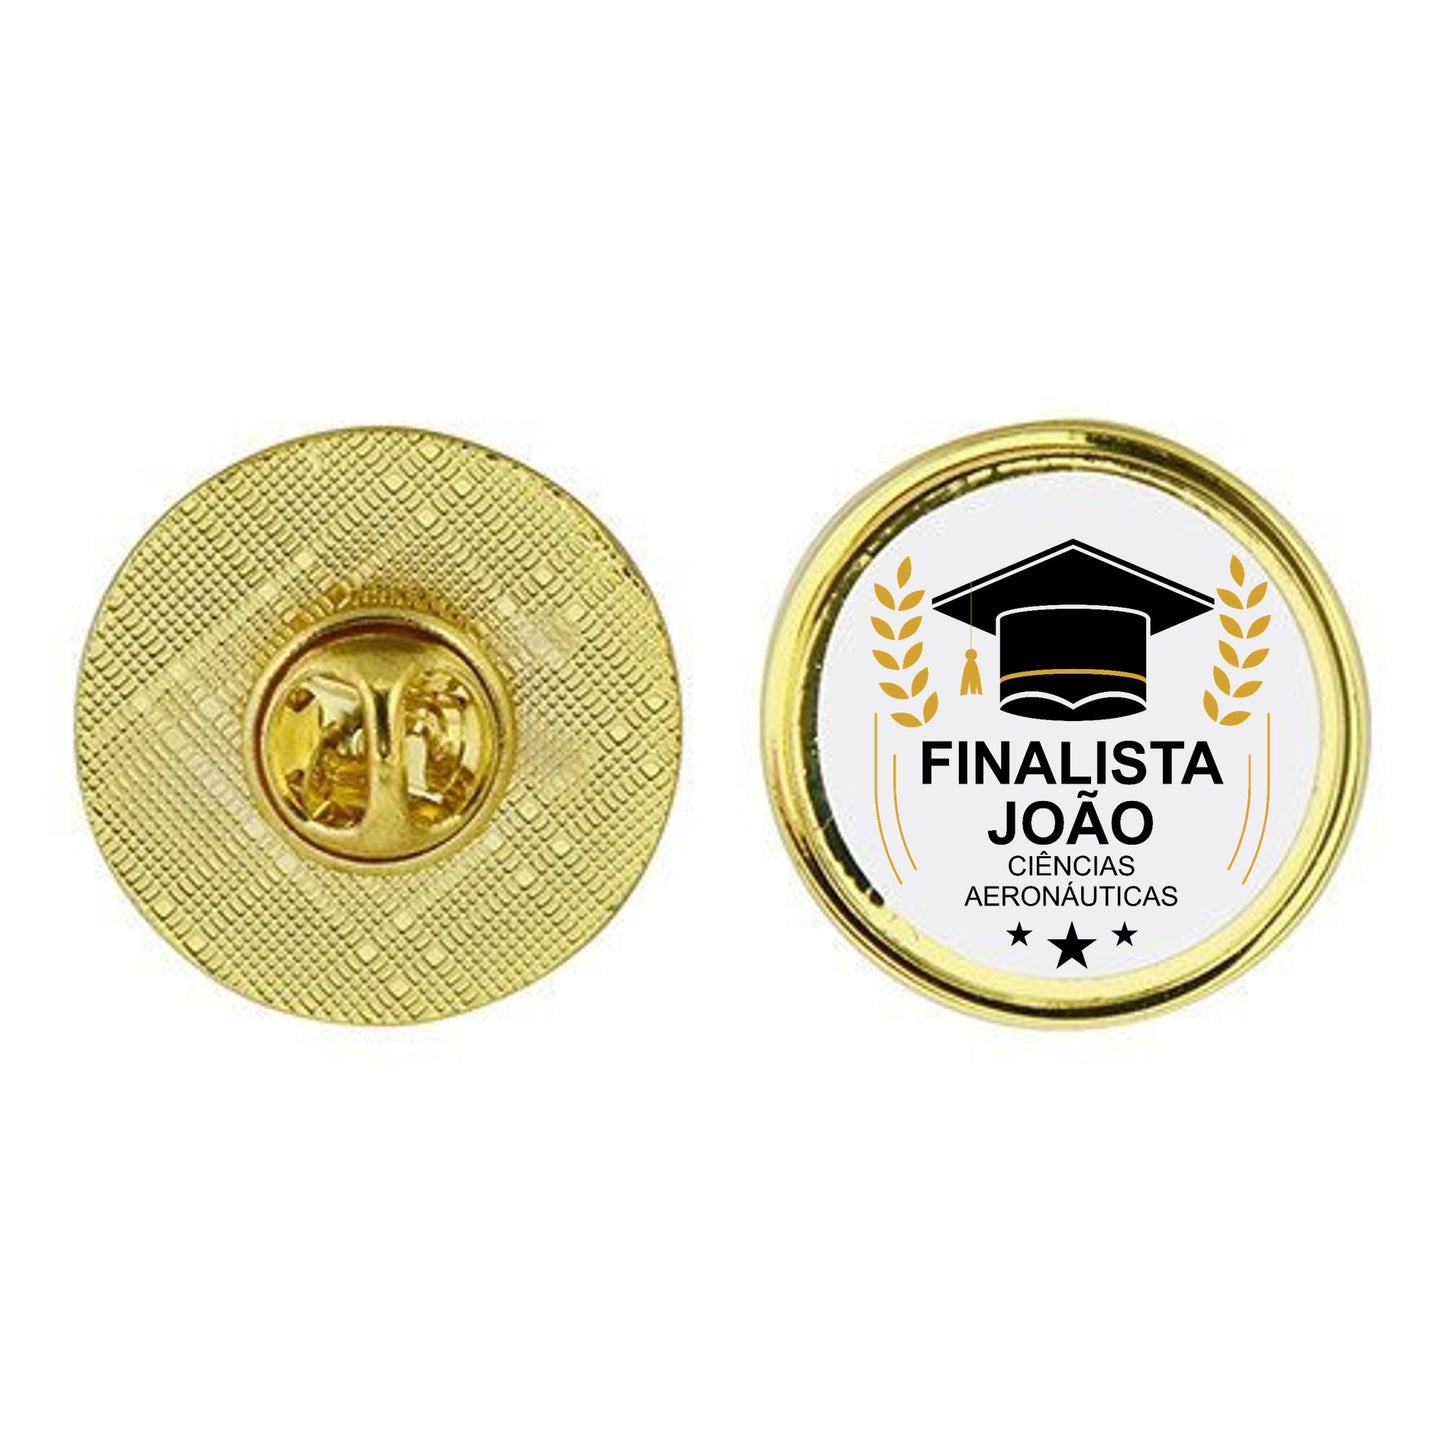 Emblema + pin "Finalista"